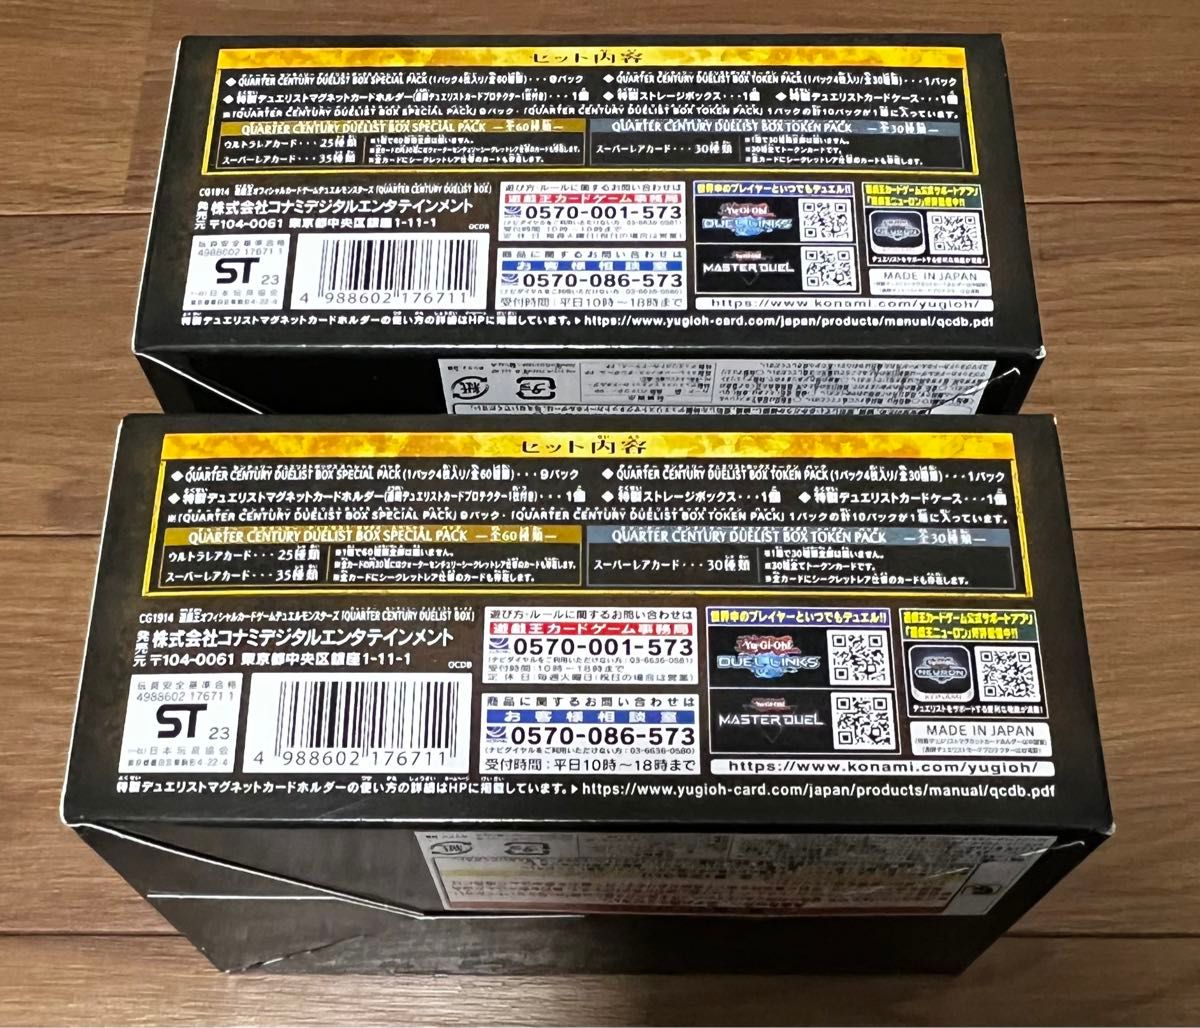 【未開封】遊戯王OCG QUARTER CENTURY DUELIST BOX 2BOX